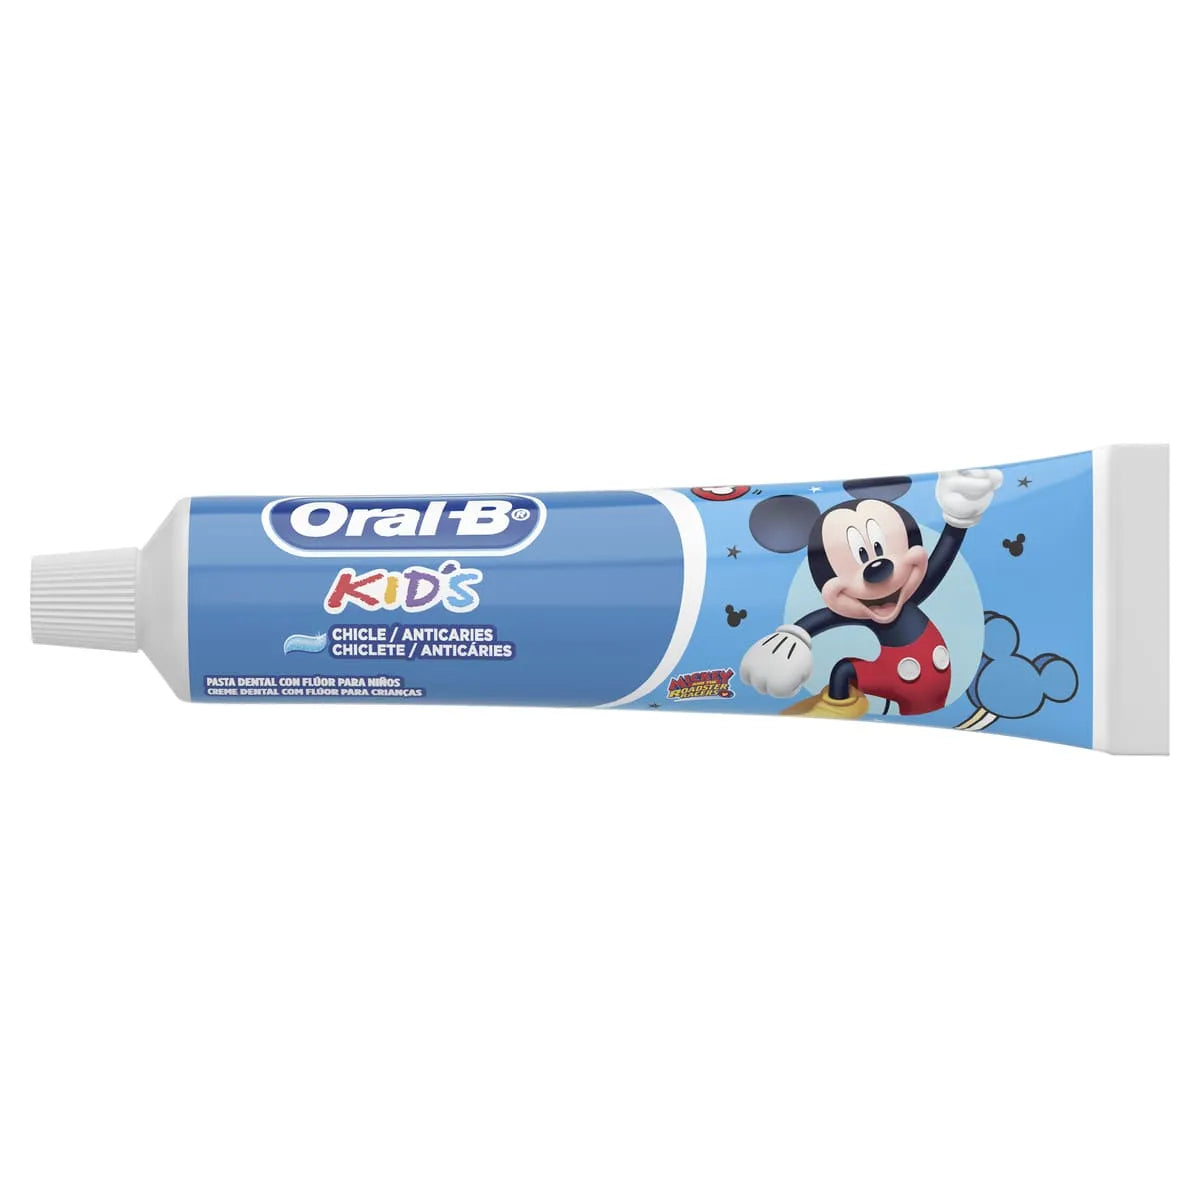 Pasta Dental Para Niños Oral-b Kids Mickey Mouse 37ml Chicle